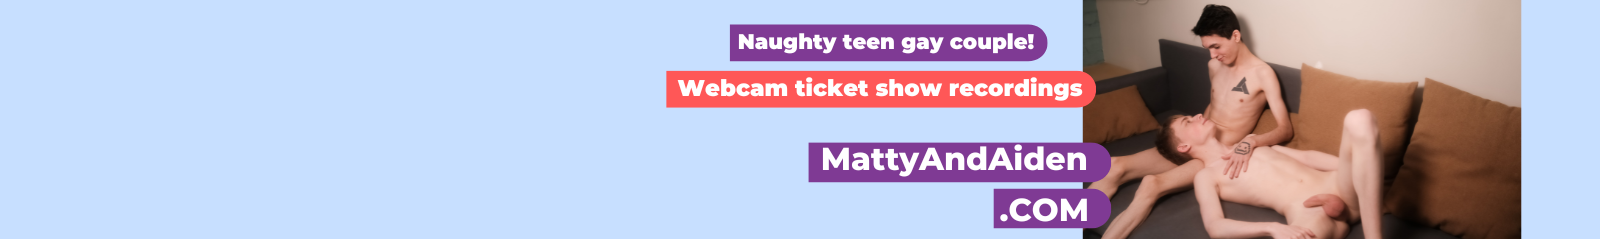 Matty and Aiden webcam ticket shows